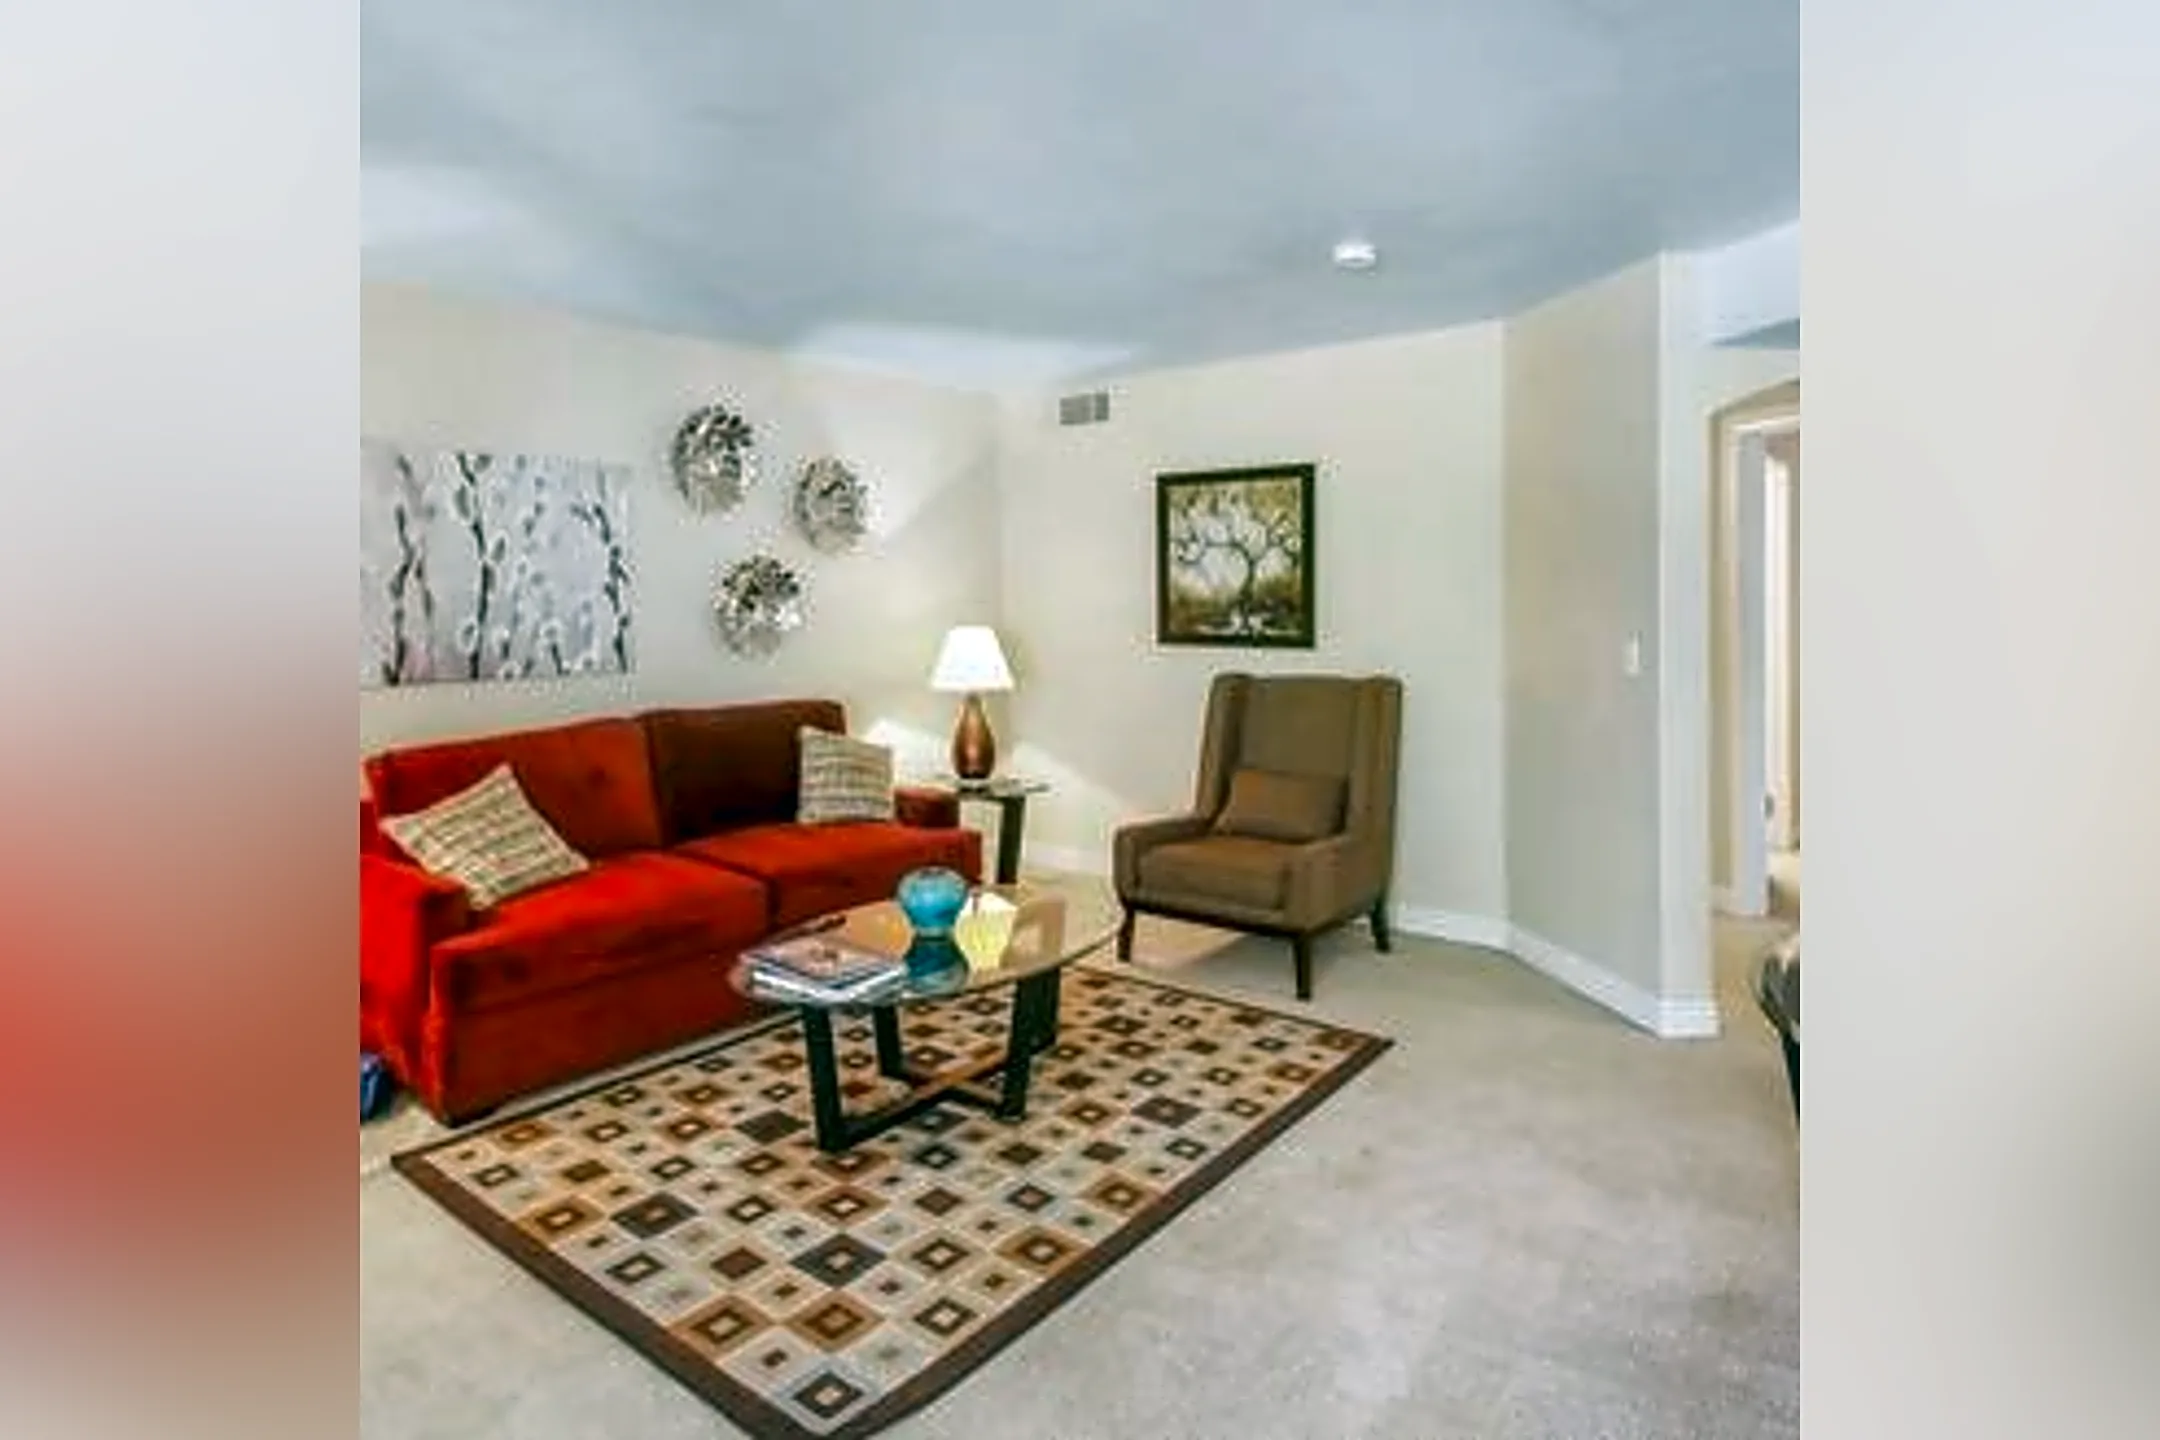 Living Room - Maravilla Apartments - Las Vegas, NV